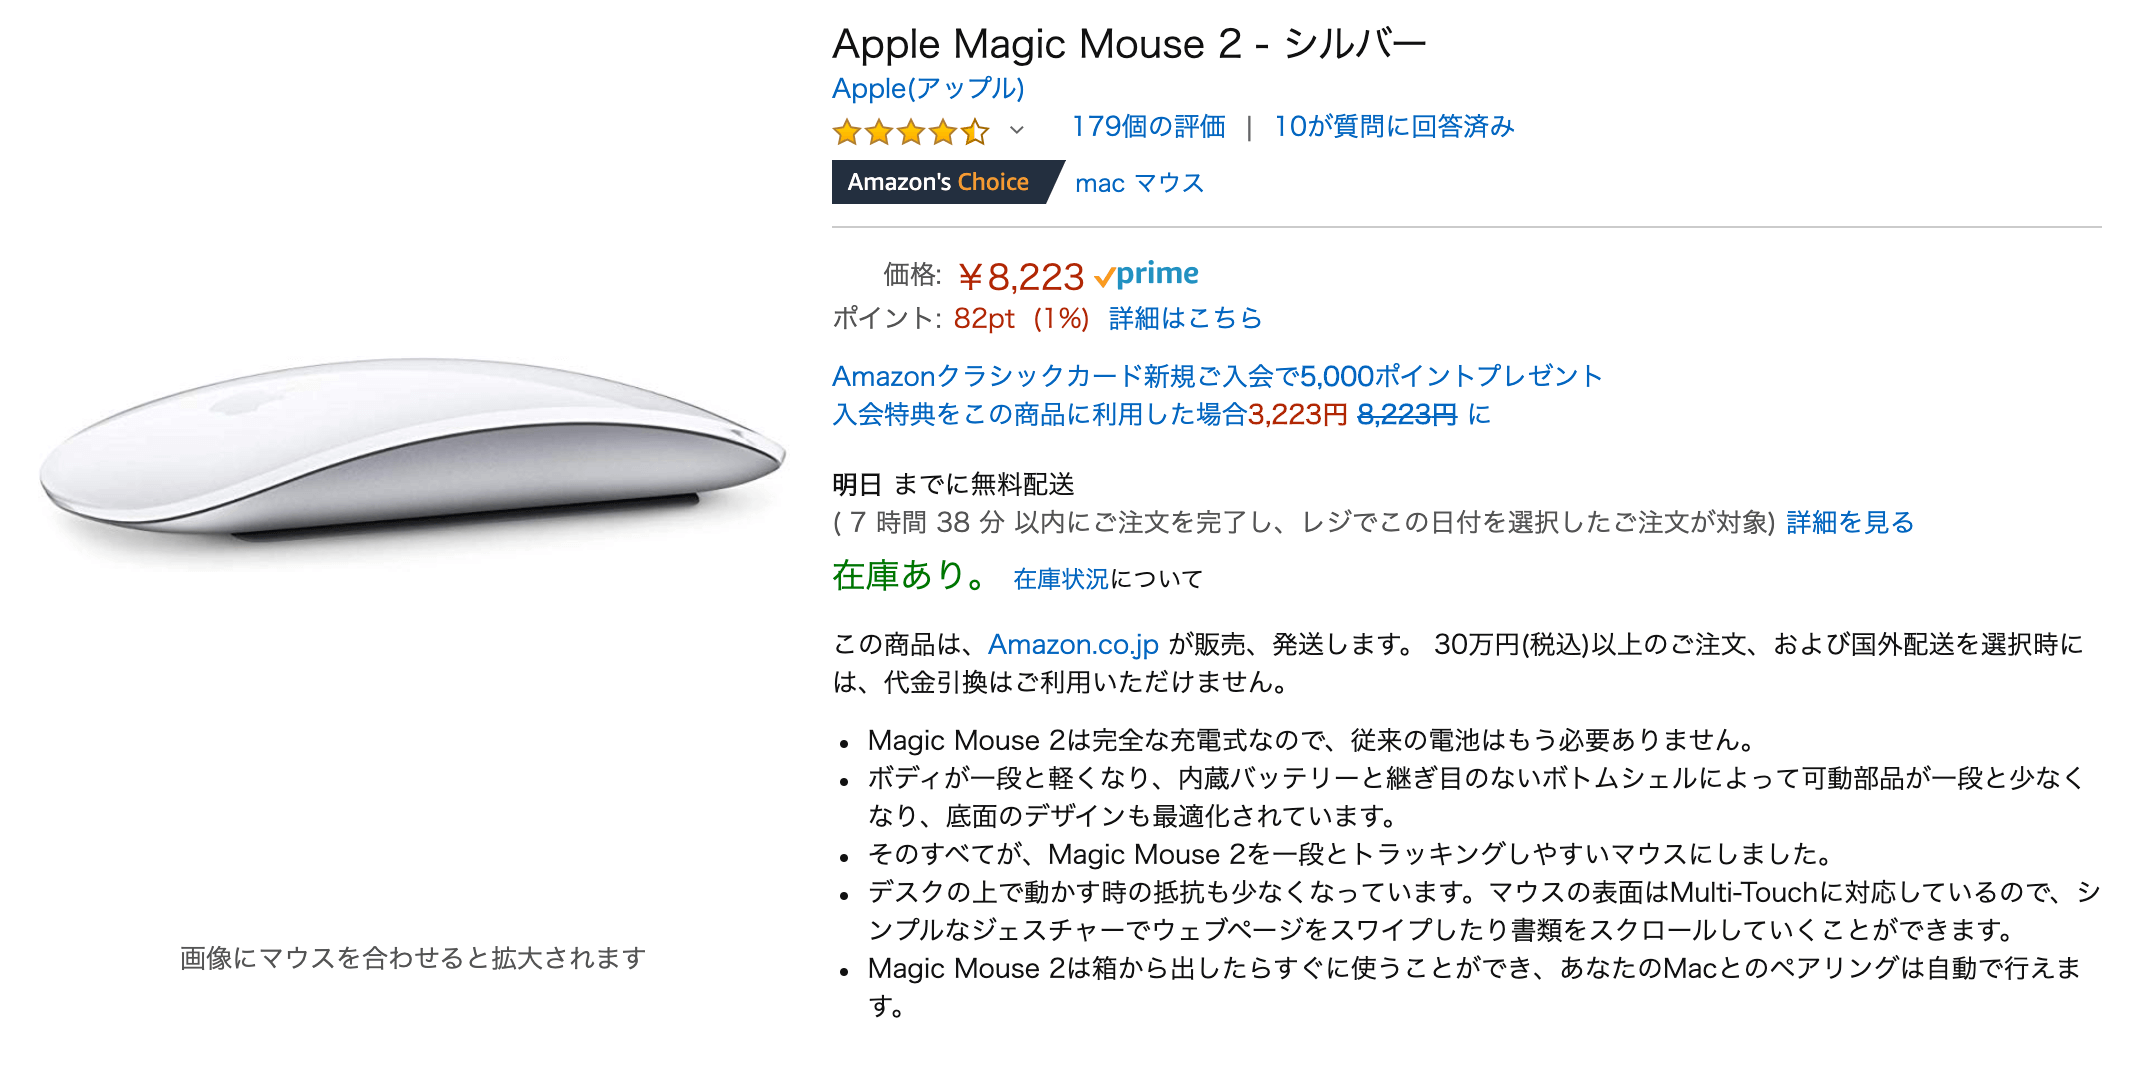 Amazon Apple Magic Mouse 2 アップル純正のマウス